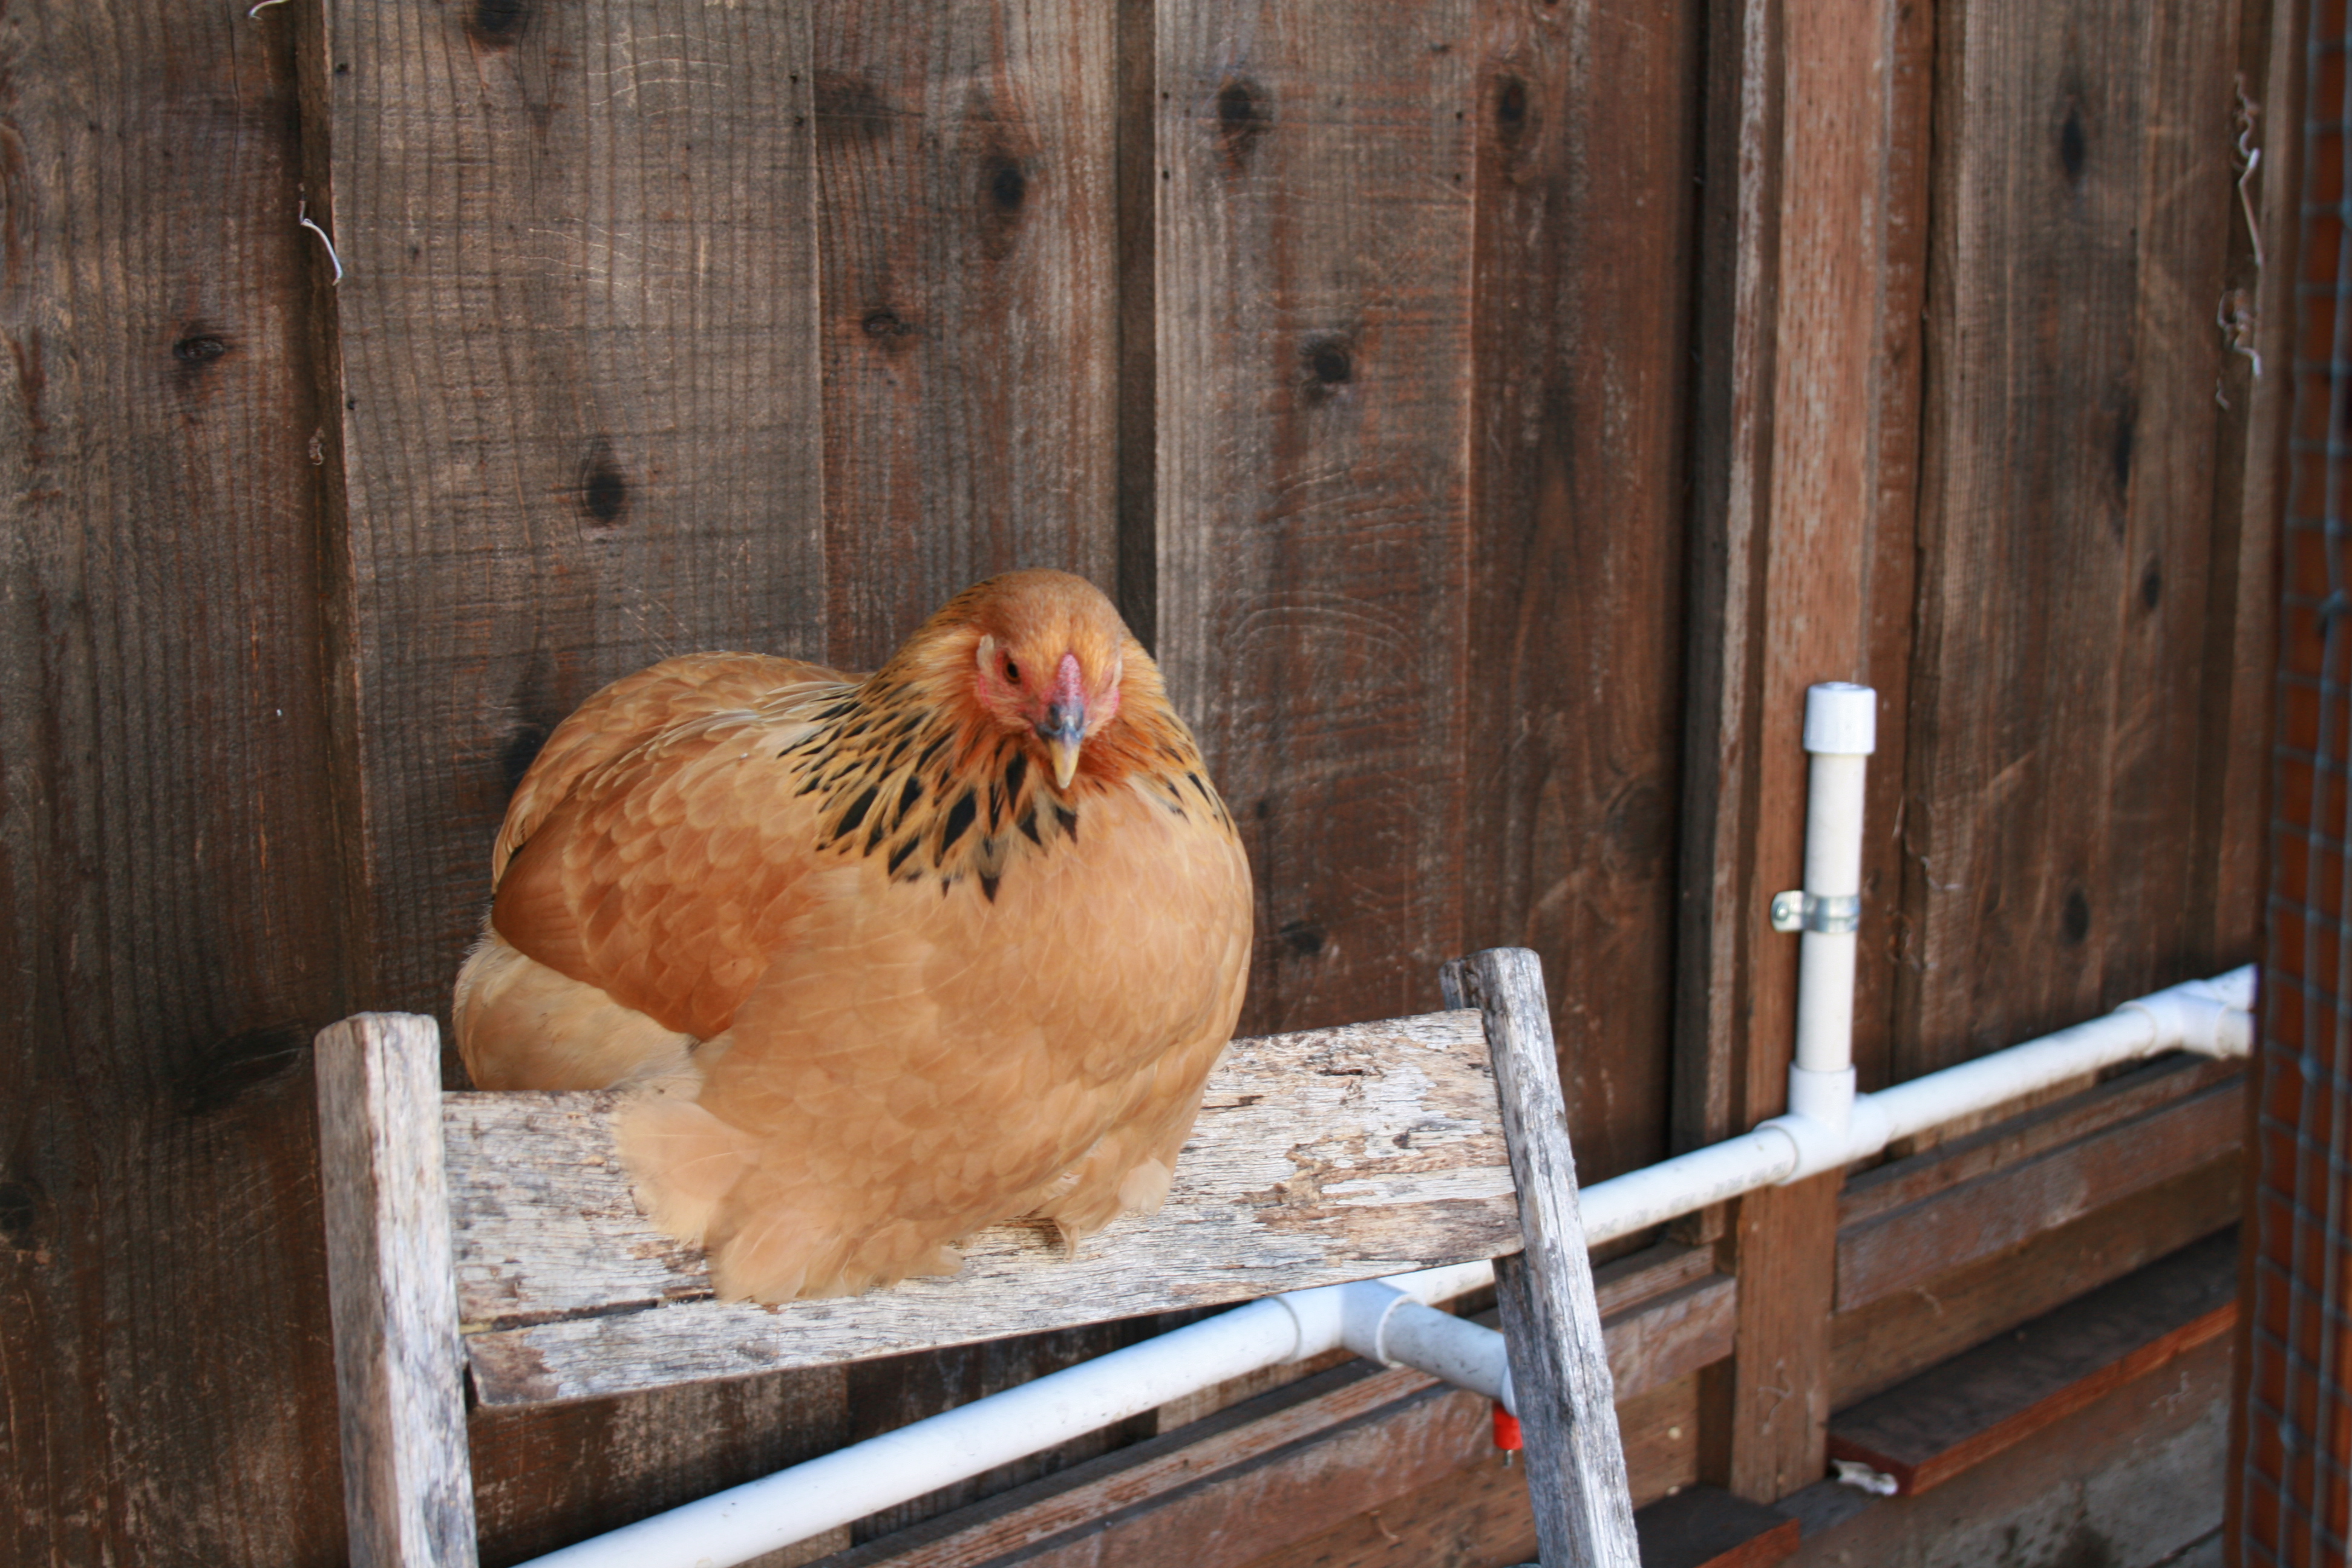 Assume a spherical chicken... 
Rosie, almost 20 weeks.